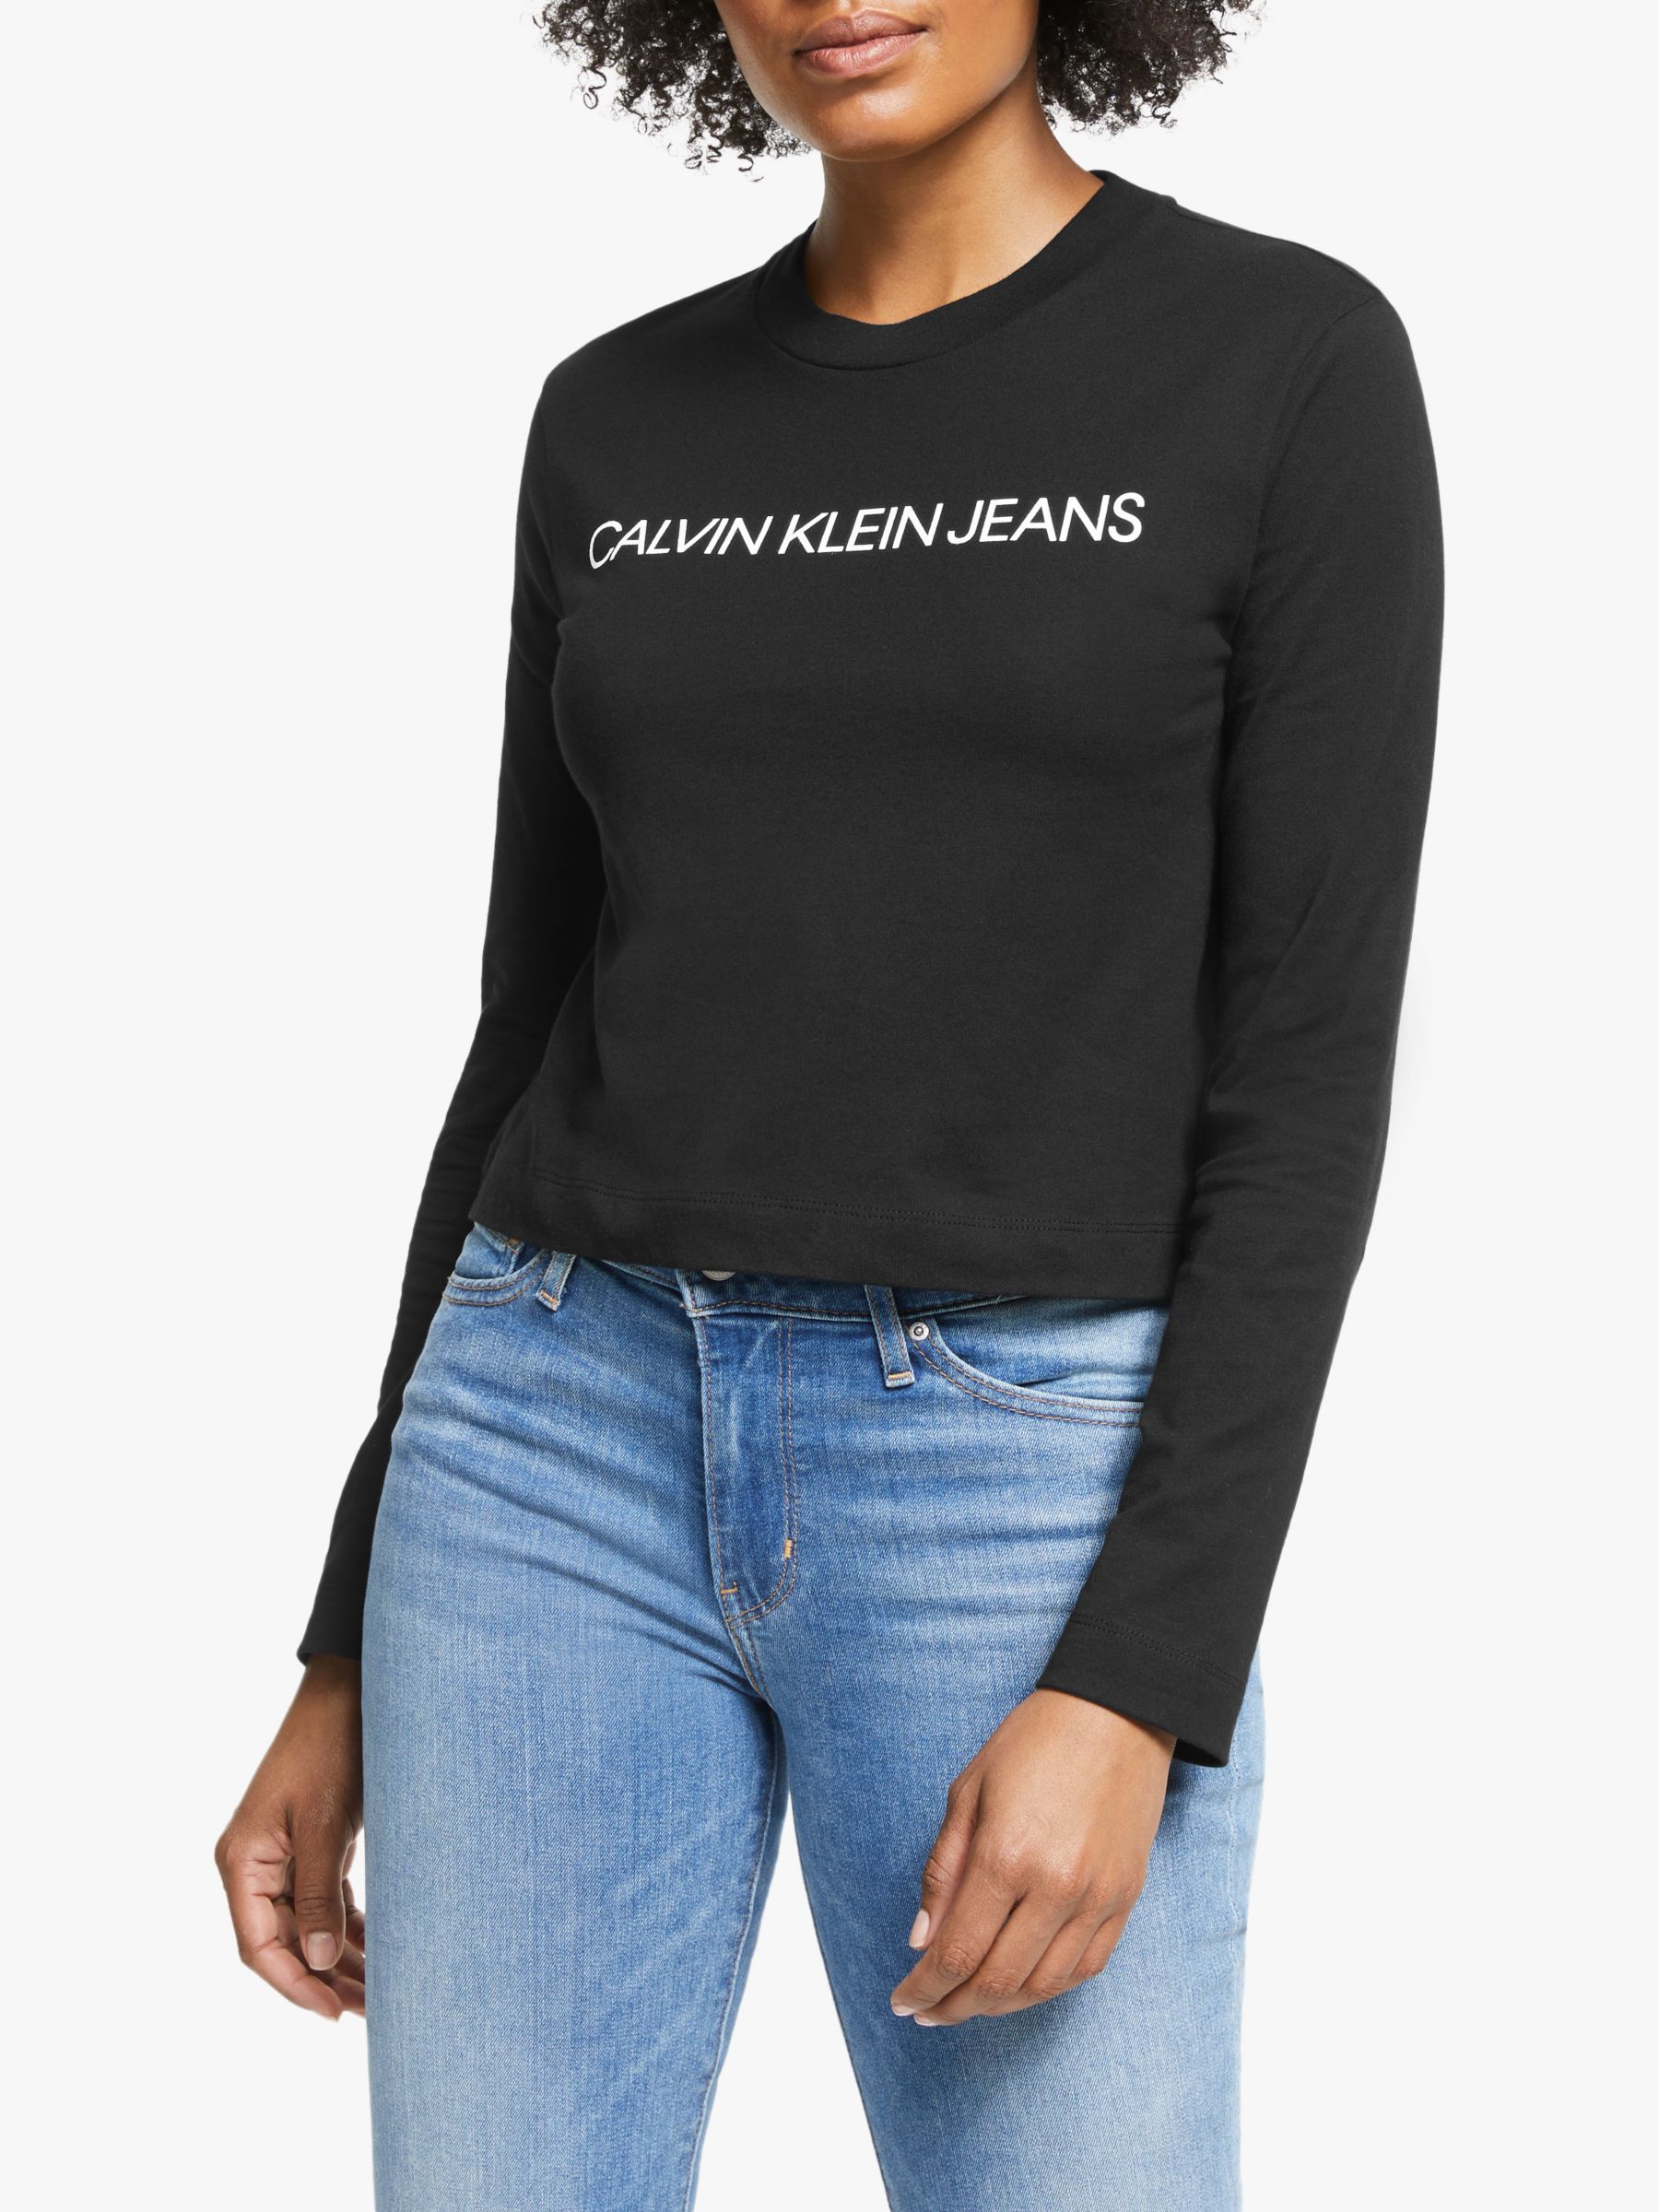 Calvin Klein Jeans T Shirt Full Sleeve Flash Sales, 55% OFF 